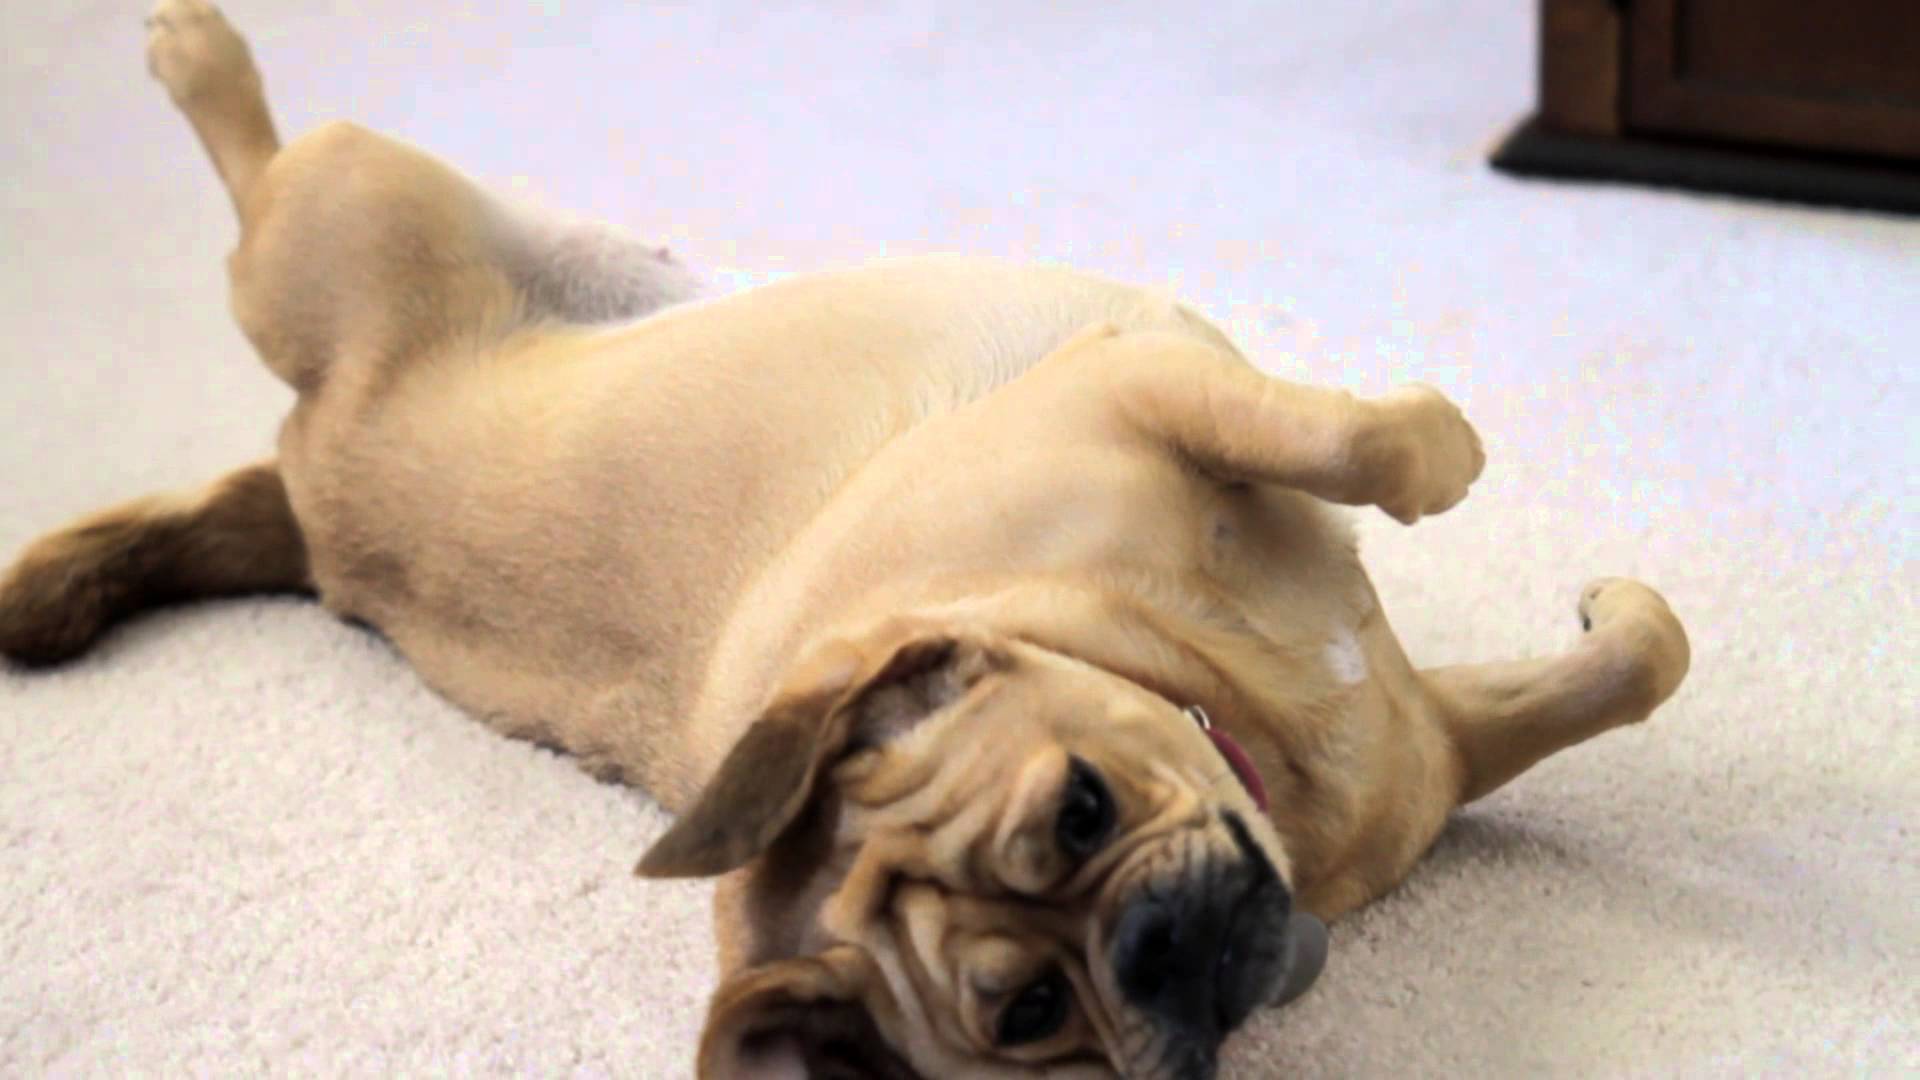 crazy puggle rolling on carpet - YouTube